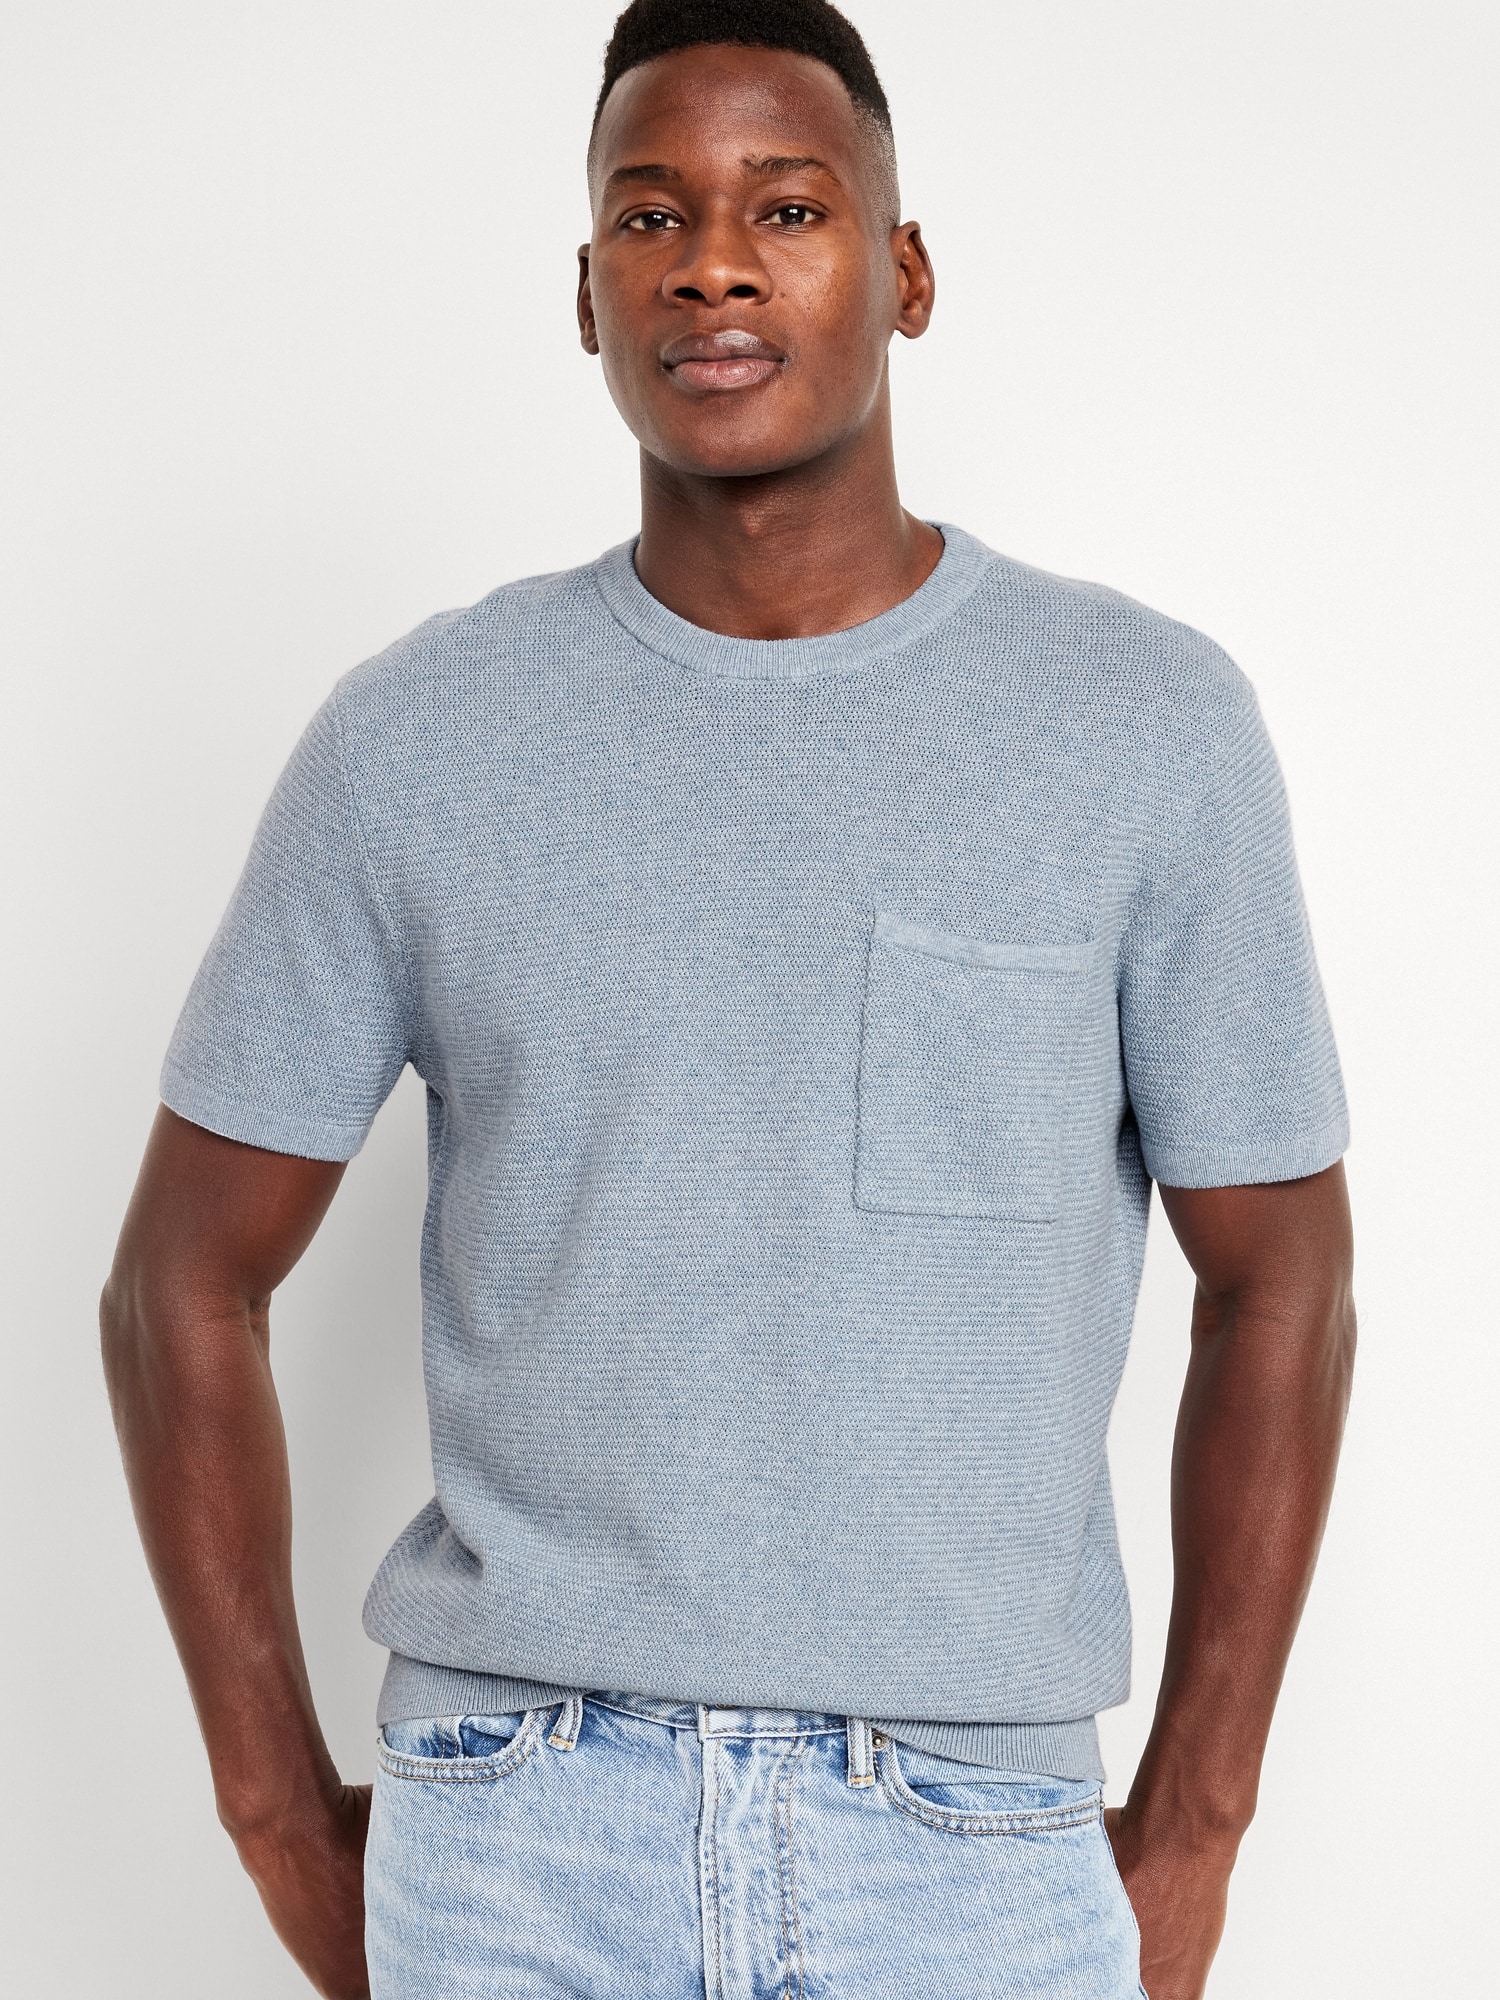 Sweater-Knit T-Shirt